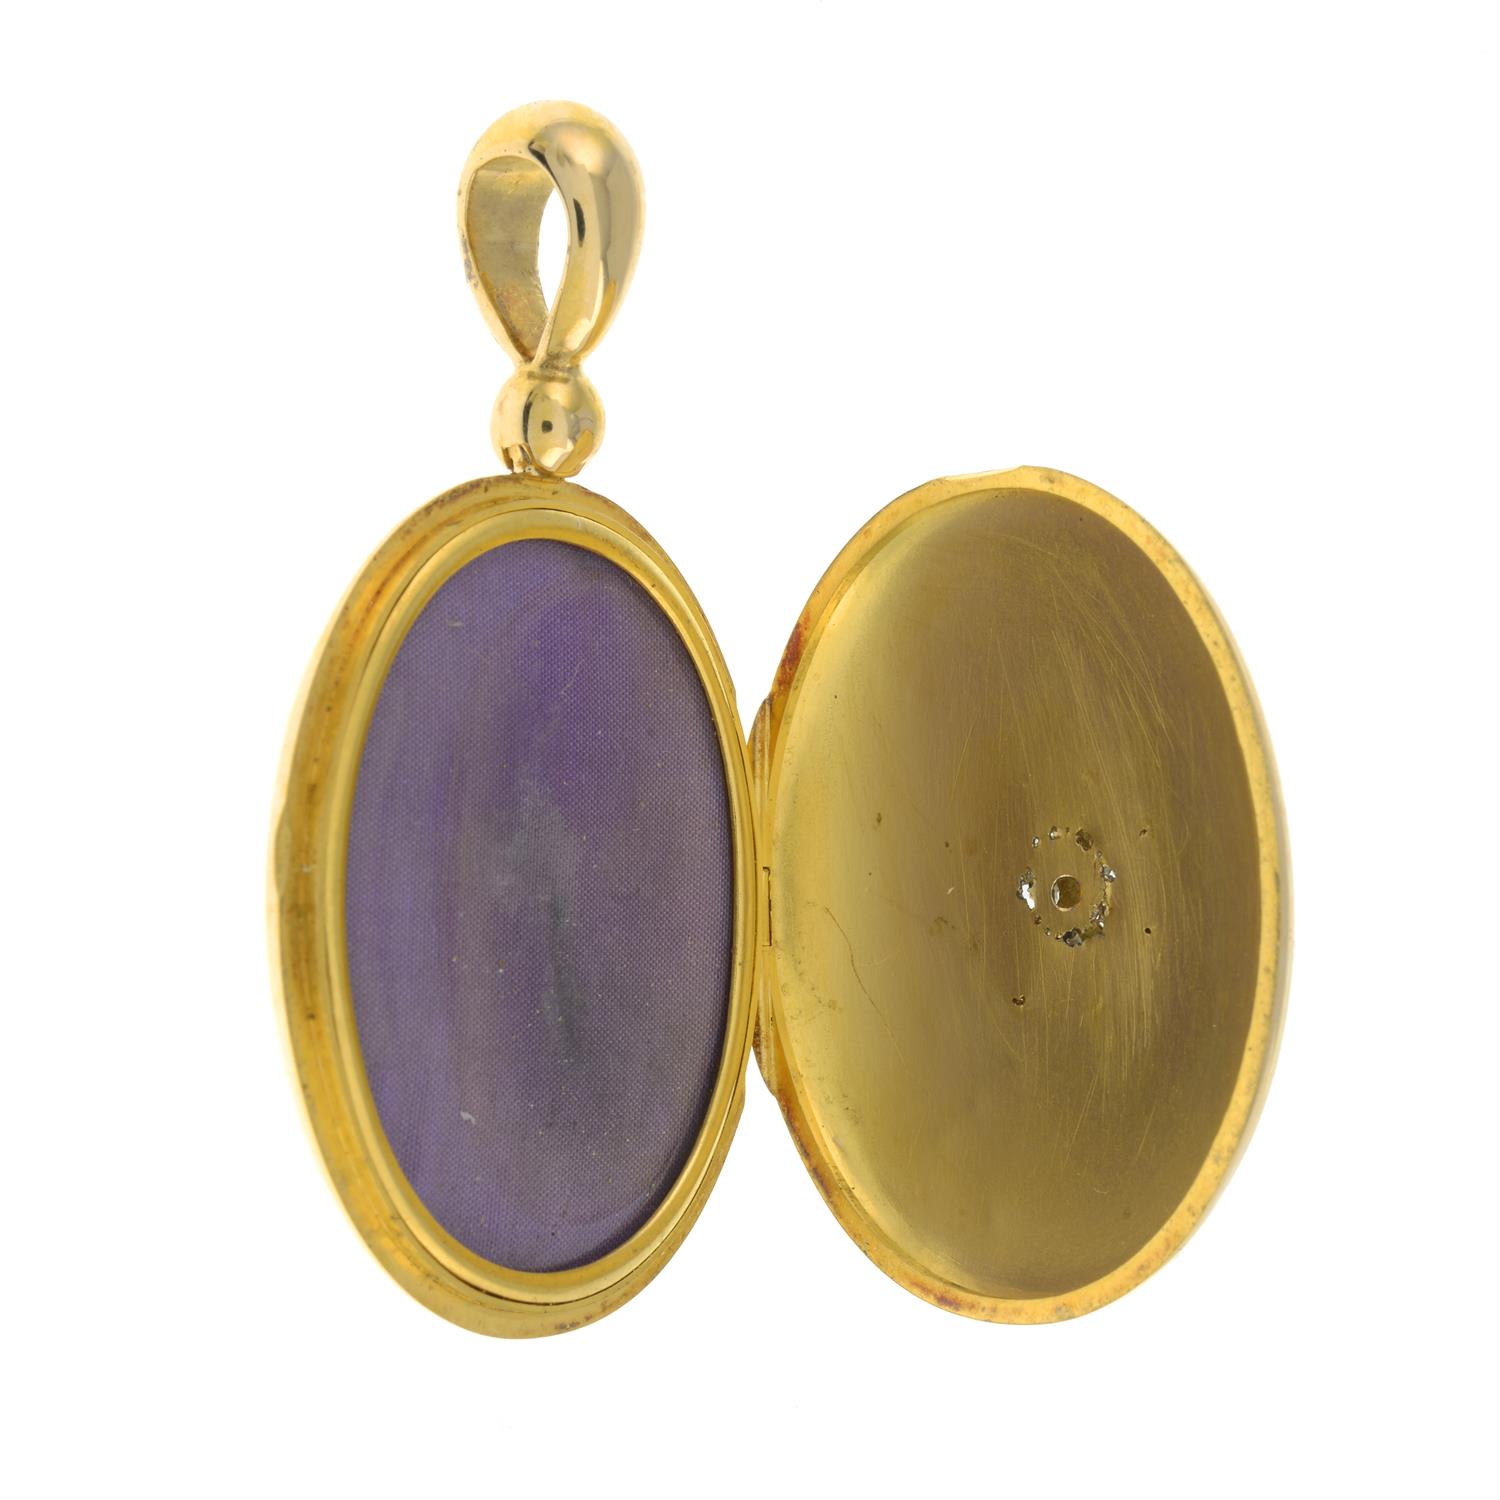 Victorian gold diamond locket pendant - Image 4 of 4